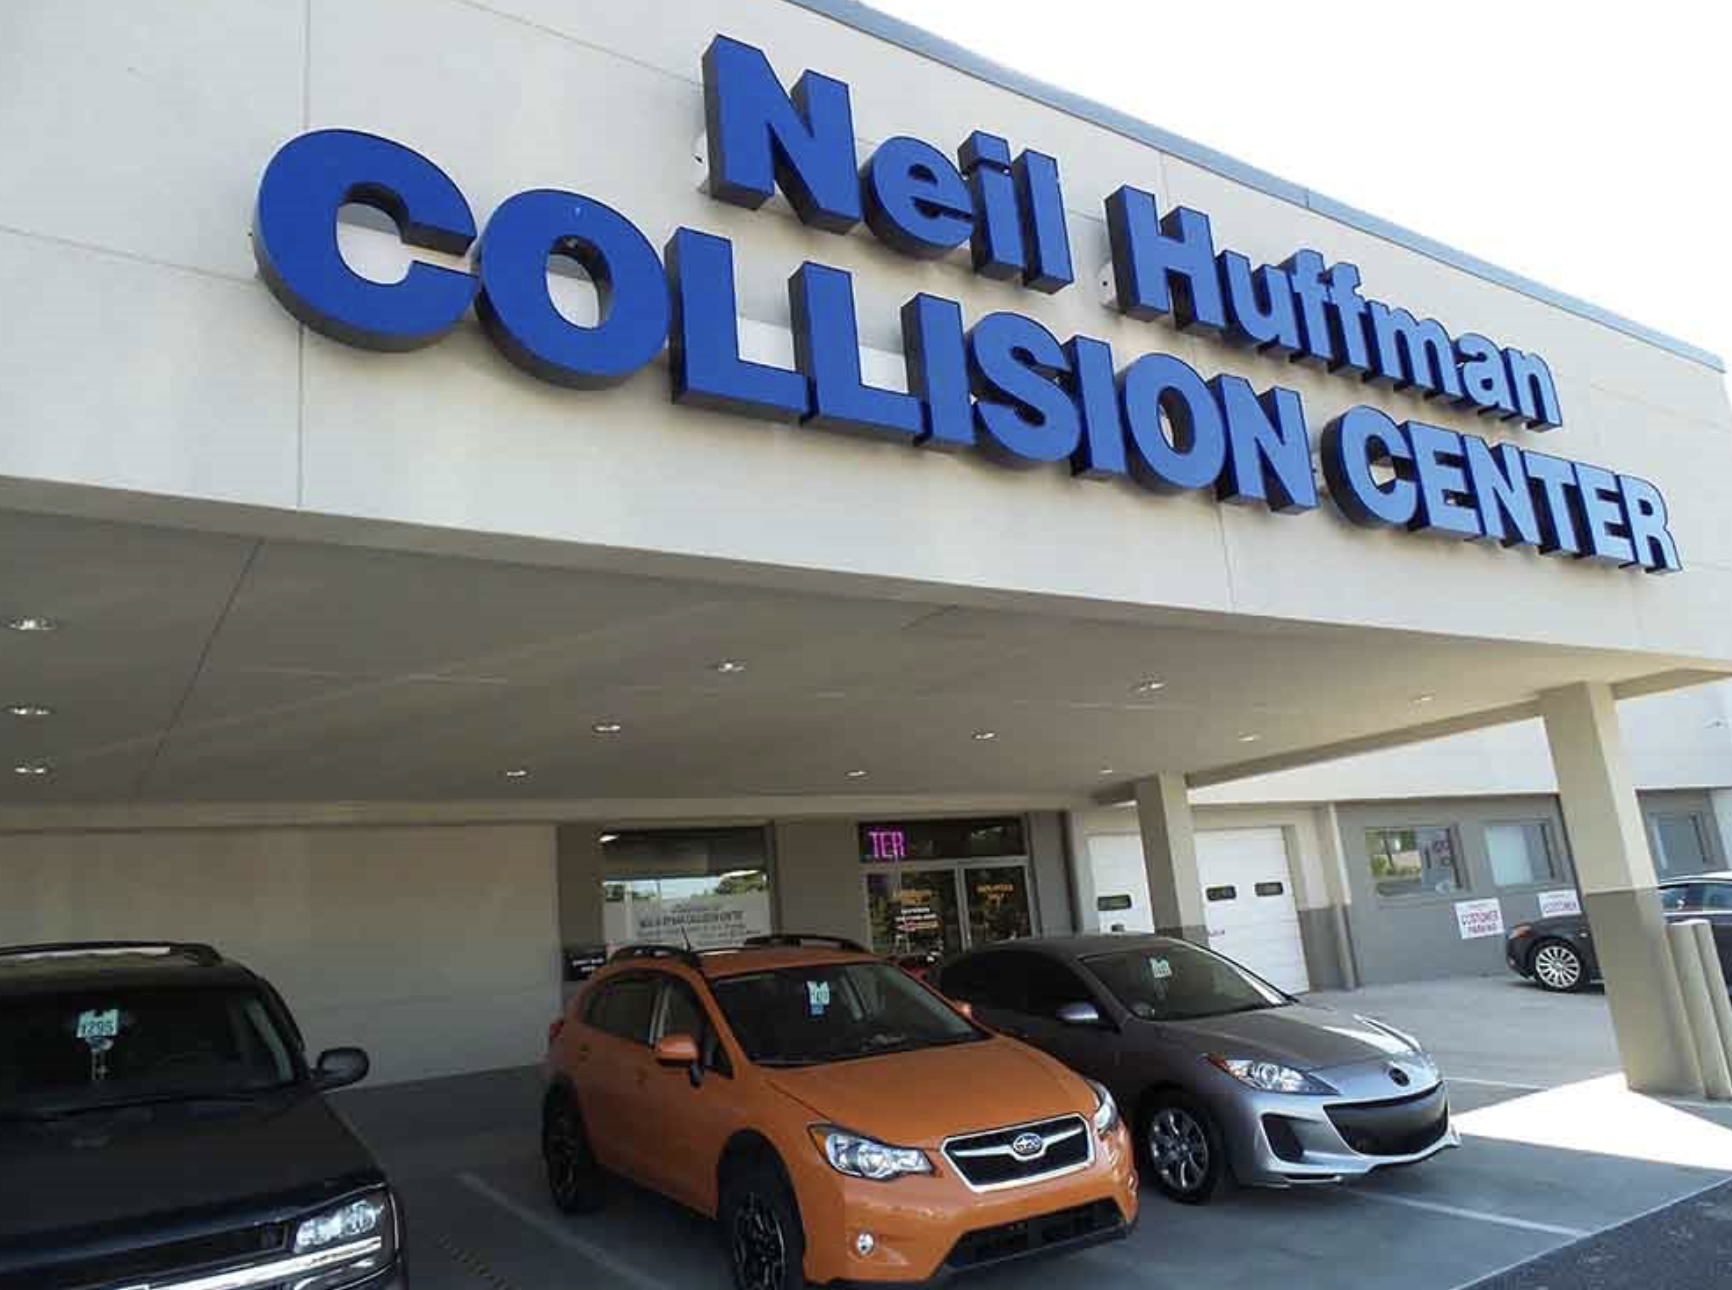 Neil Huffman Collision Center